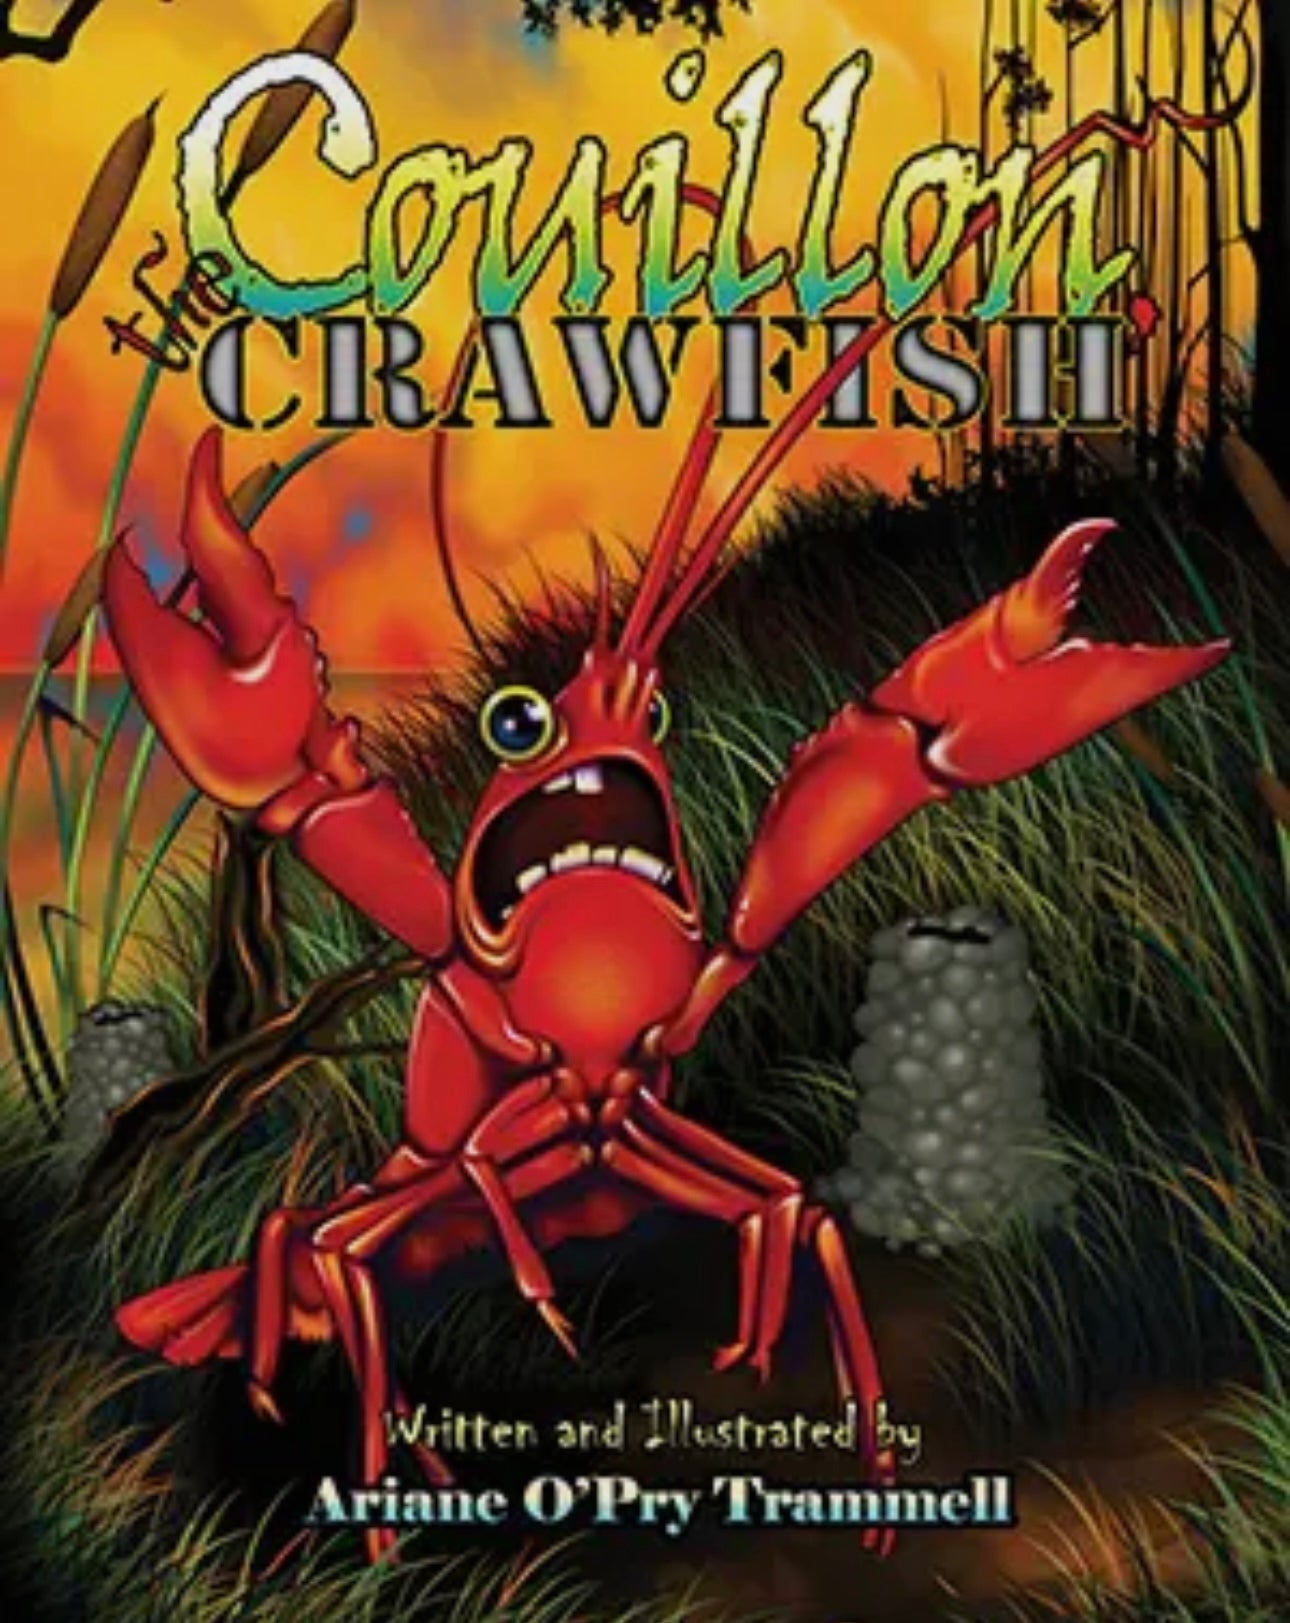 The Couillon Crawfish Book